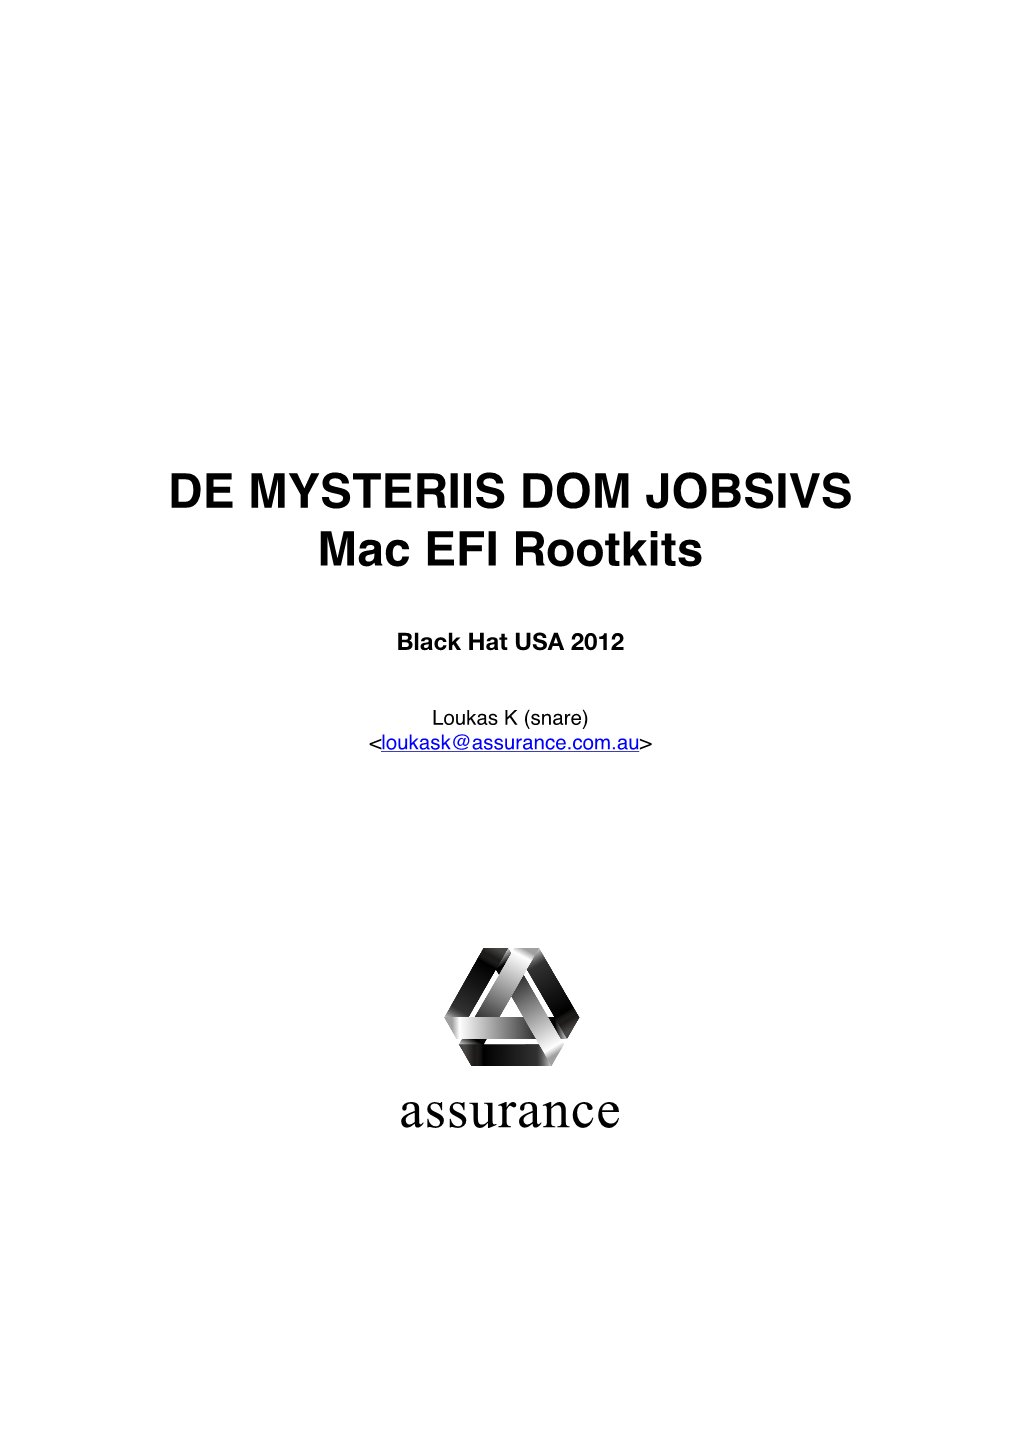 DE MYSTERIIS DOM JOBSIVS: Mac EFI Rootkits